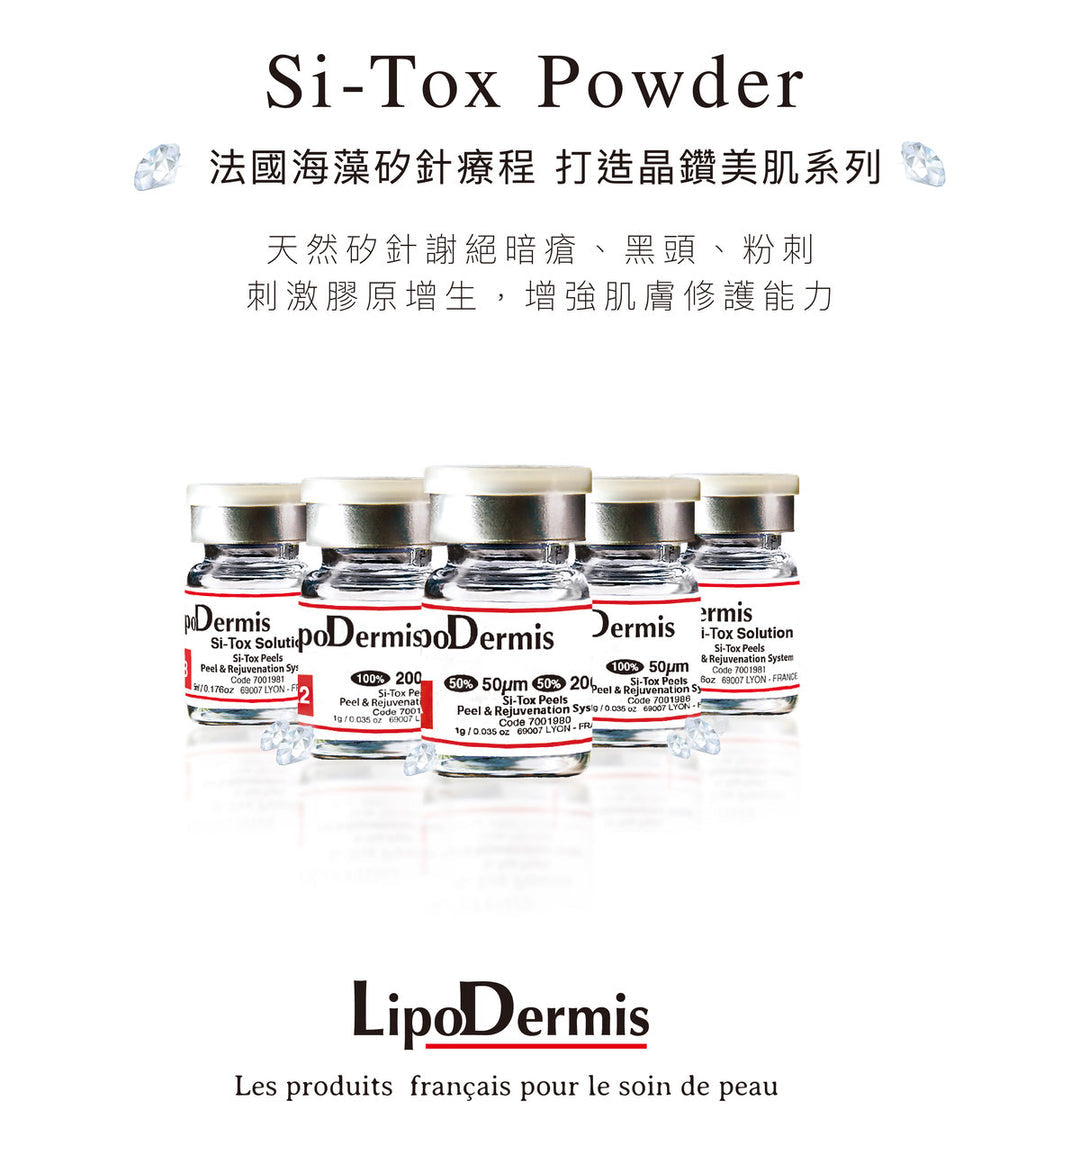 Lipodermis海藻矽針陶瓷肌/1set一次 Si-Tox Peels Peel & Rejuvenation System - Beauty’s 5skin 